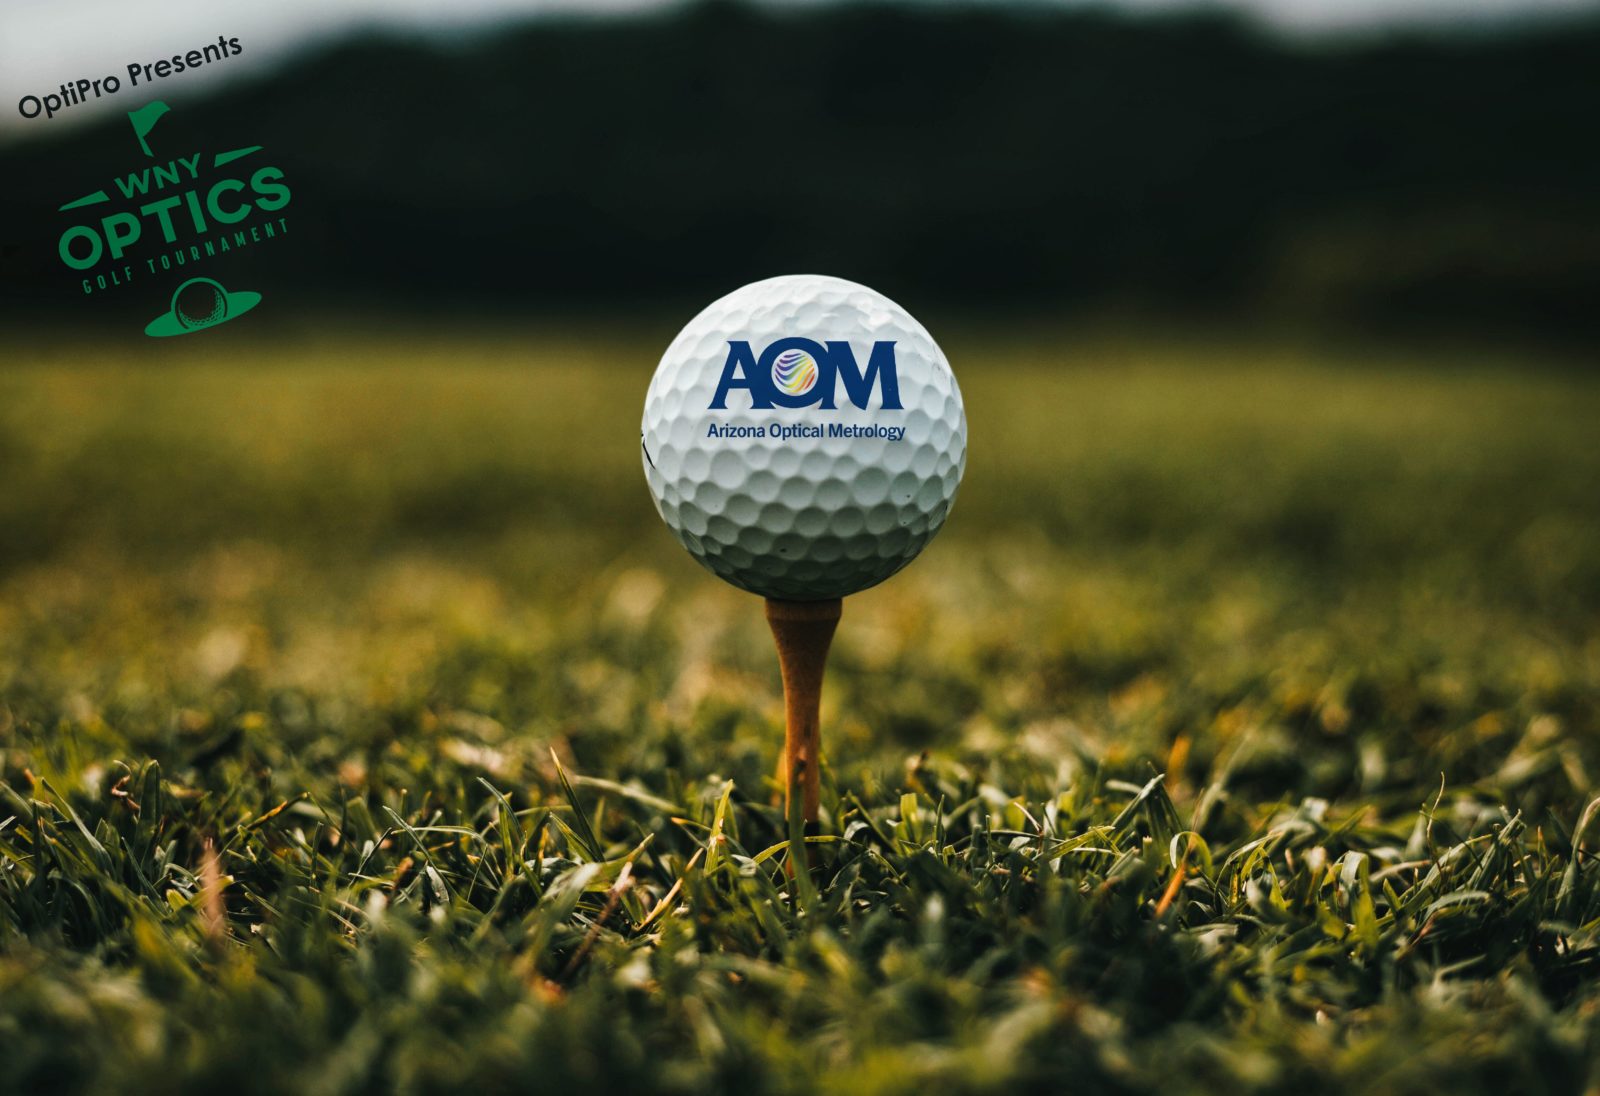 AOM Sponsors/Participates in the WNY Optics Golf Tournament